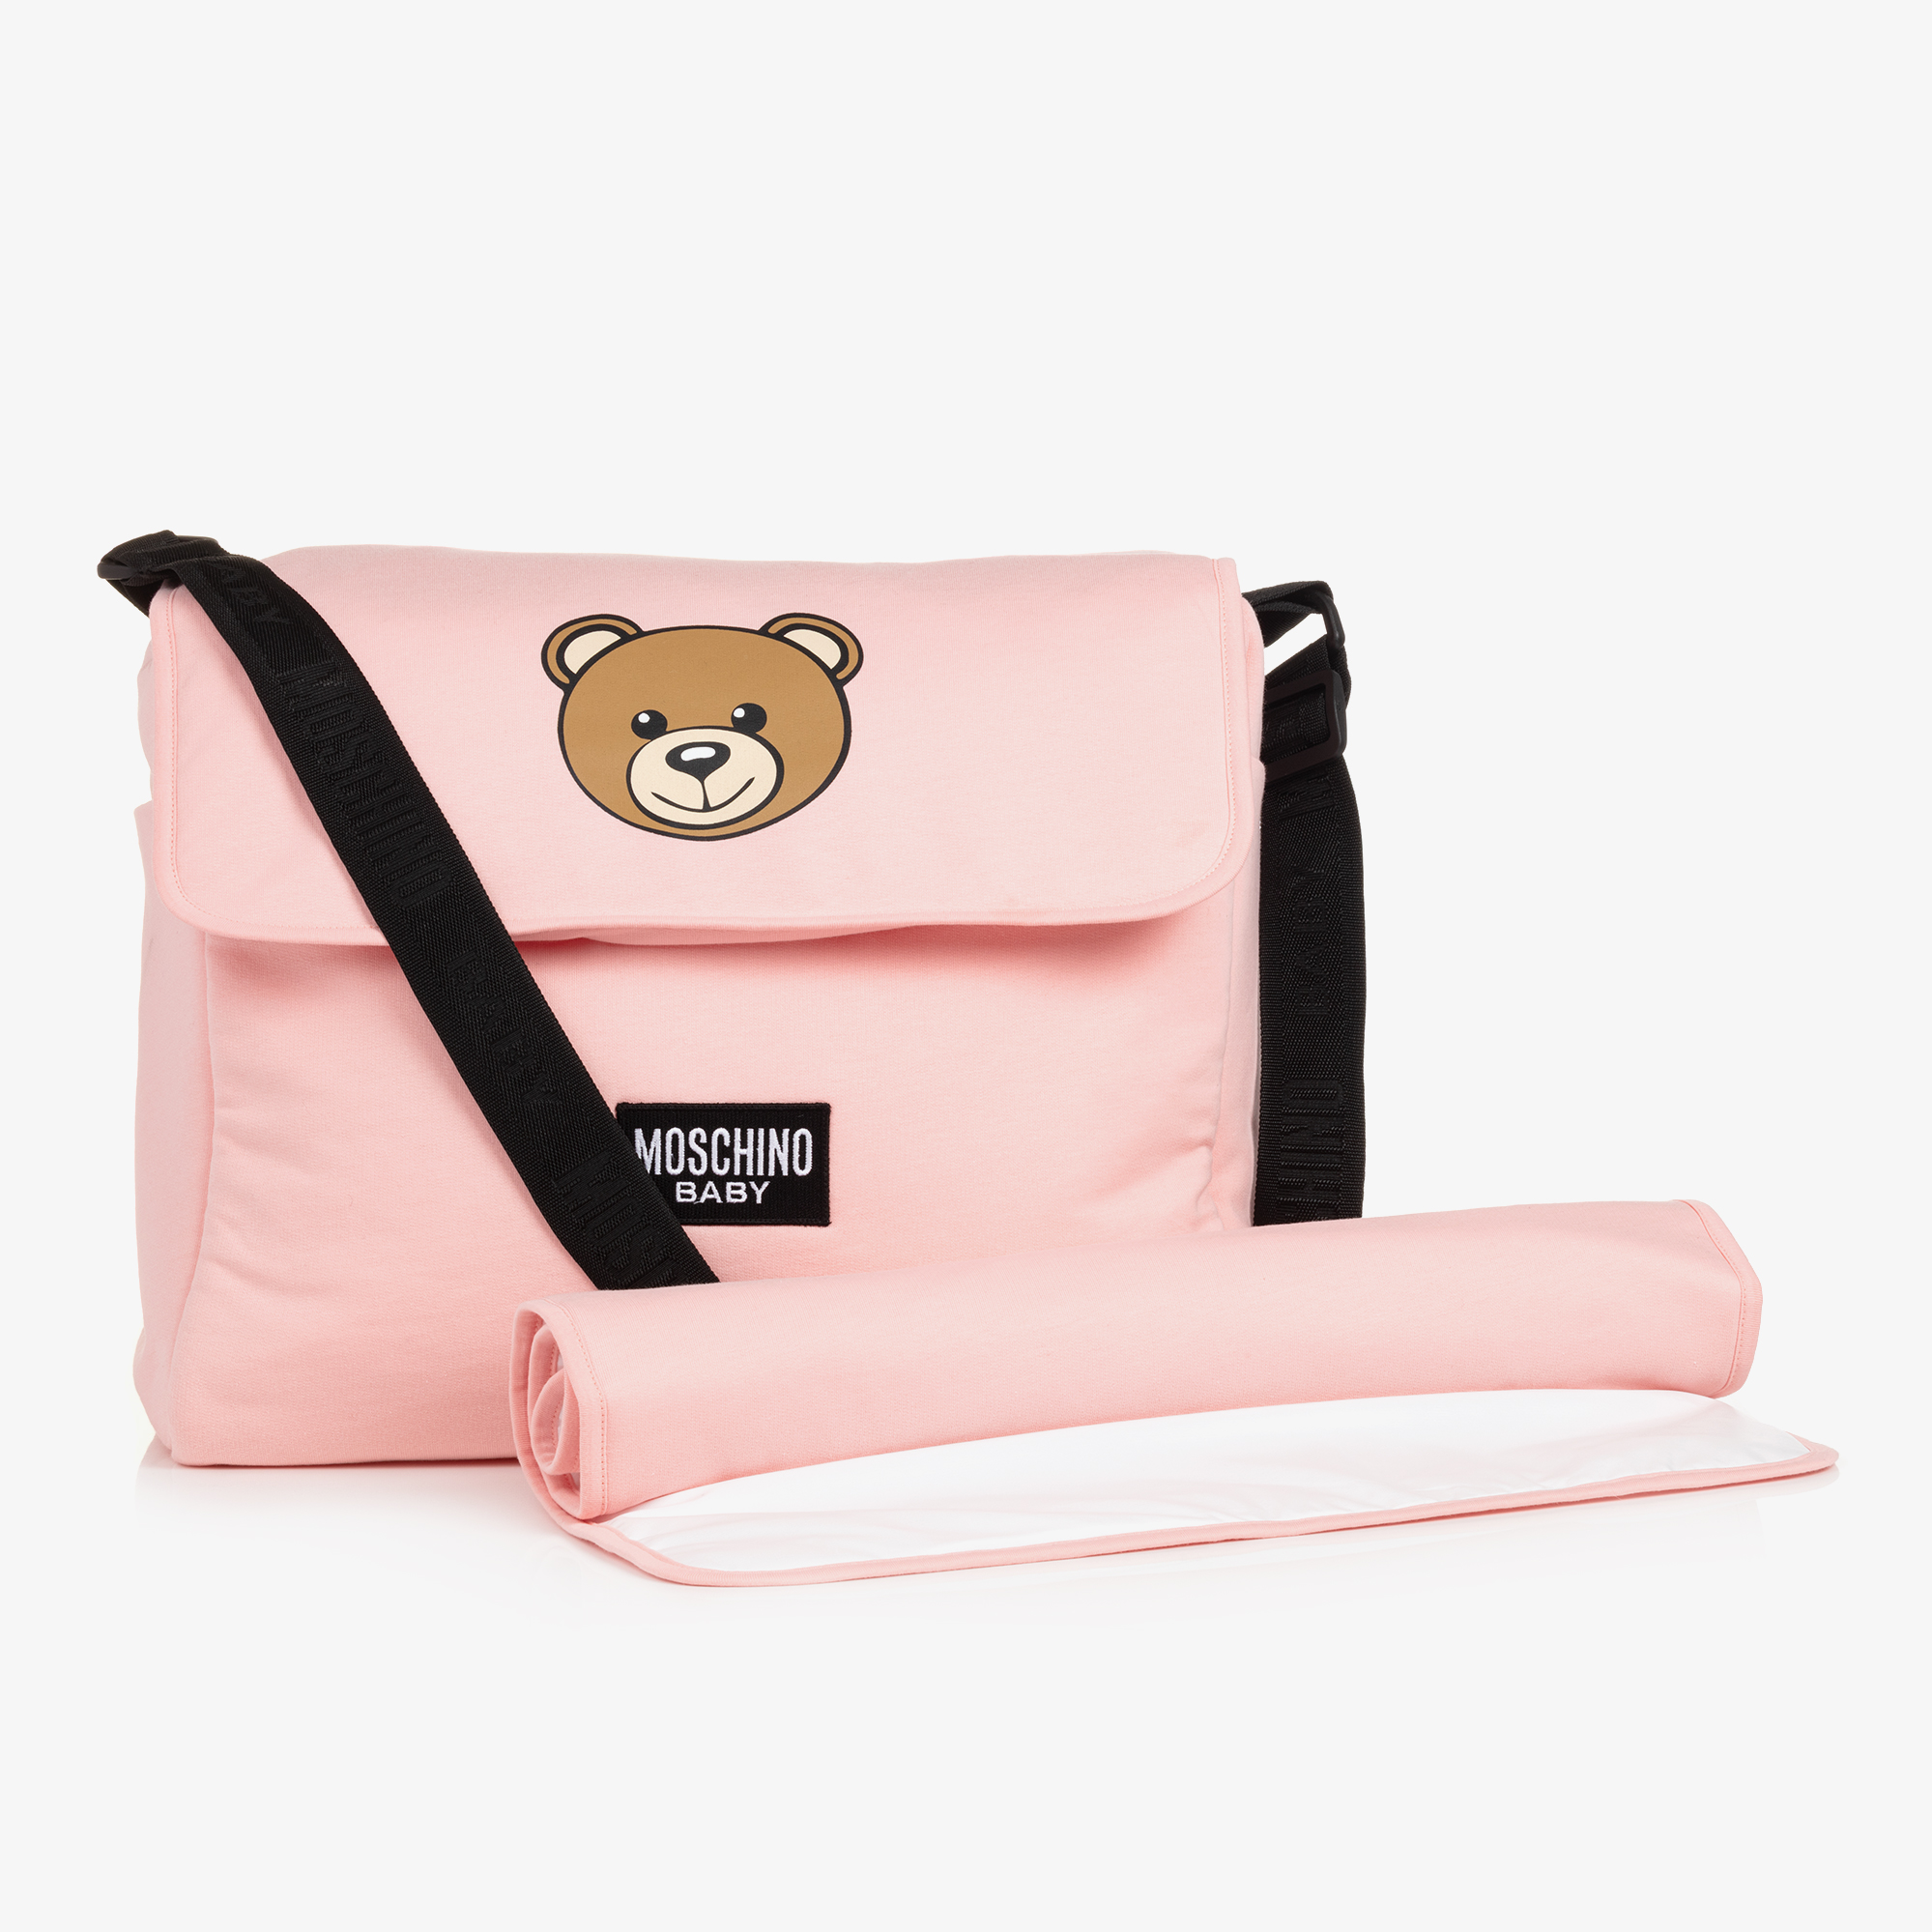 Moschino Pink Teddy Bear Mini Tote Bag at FORZIERI